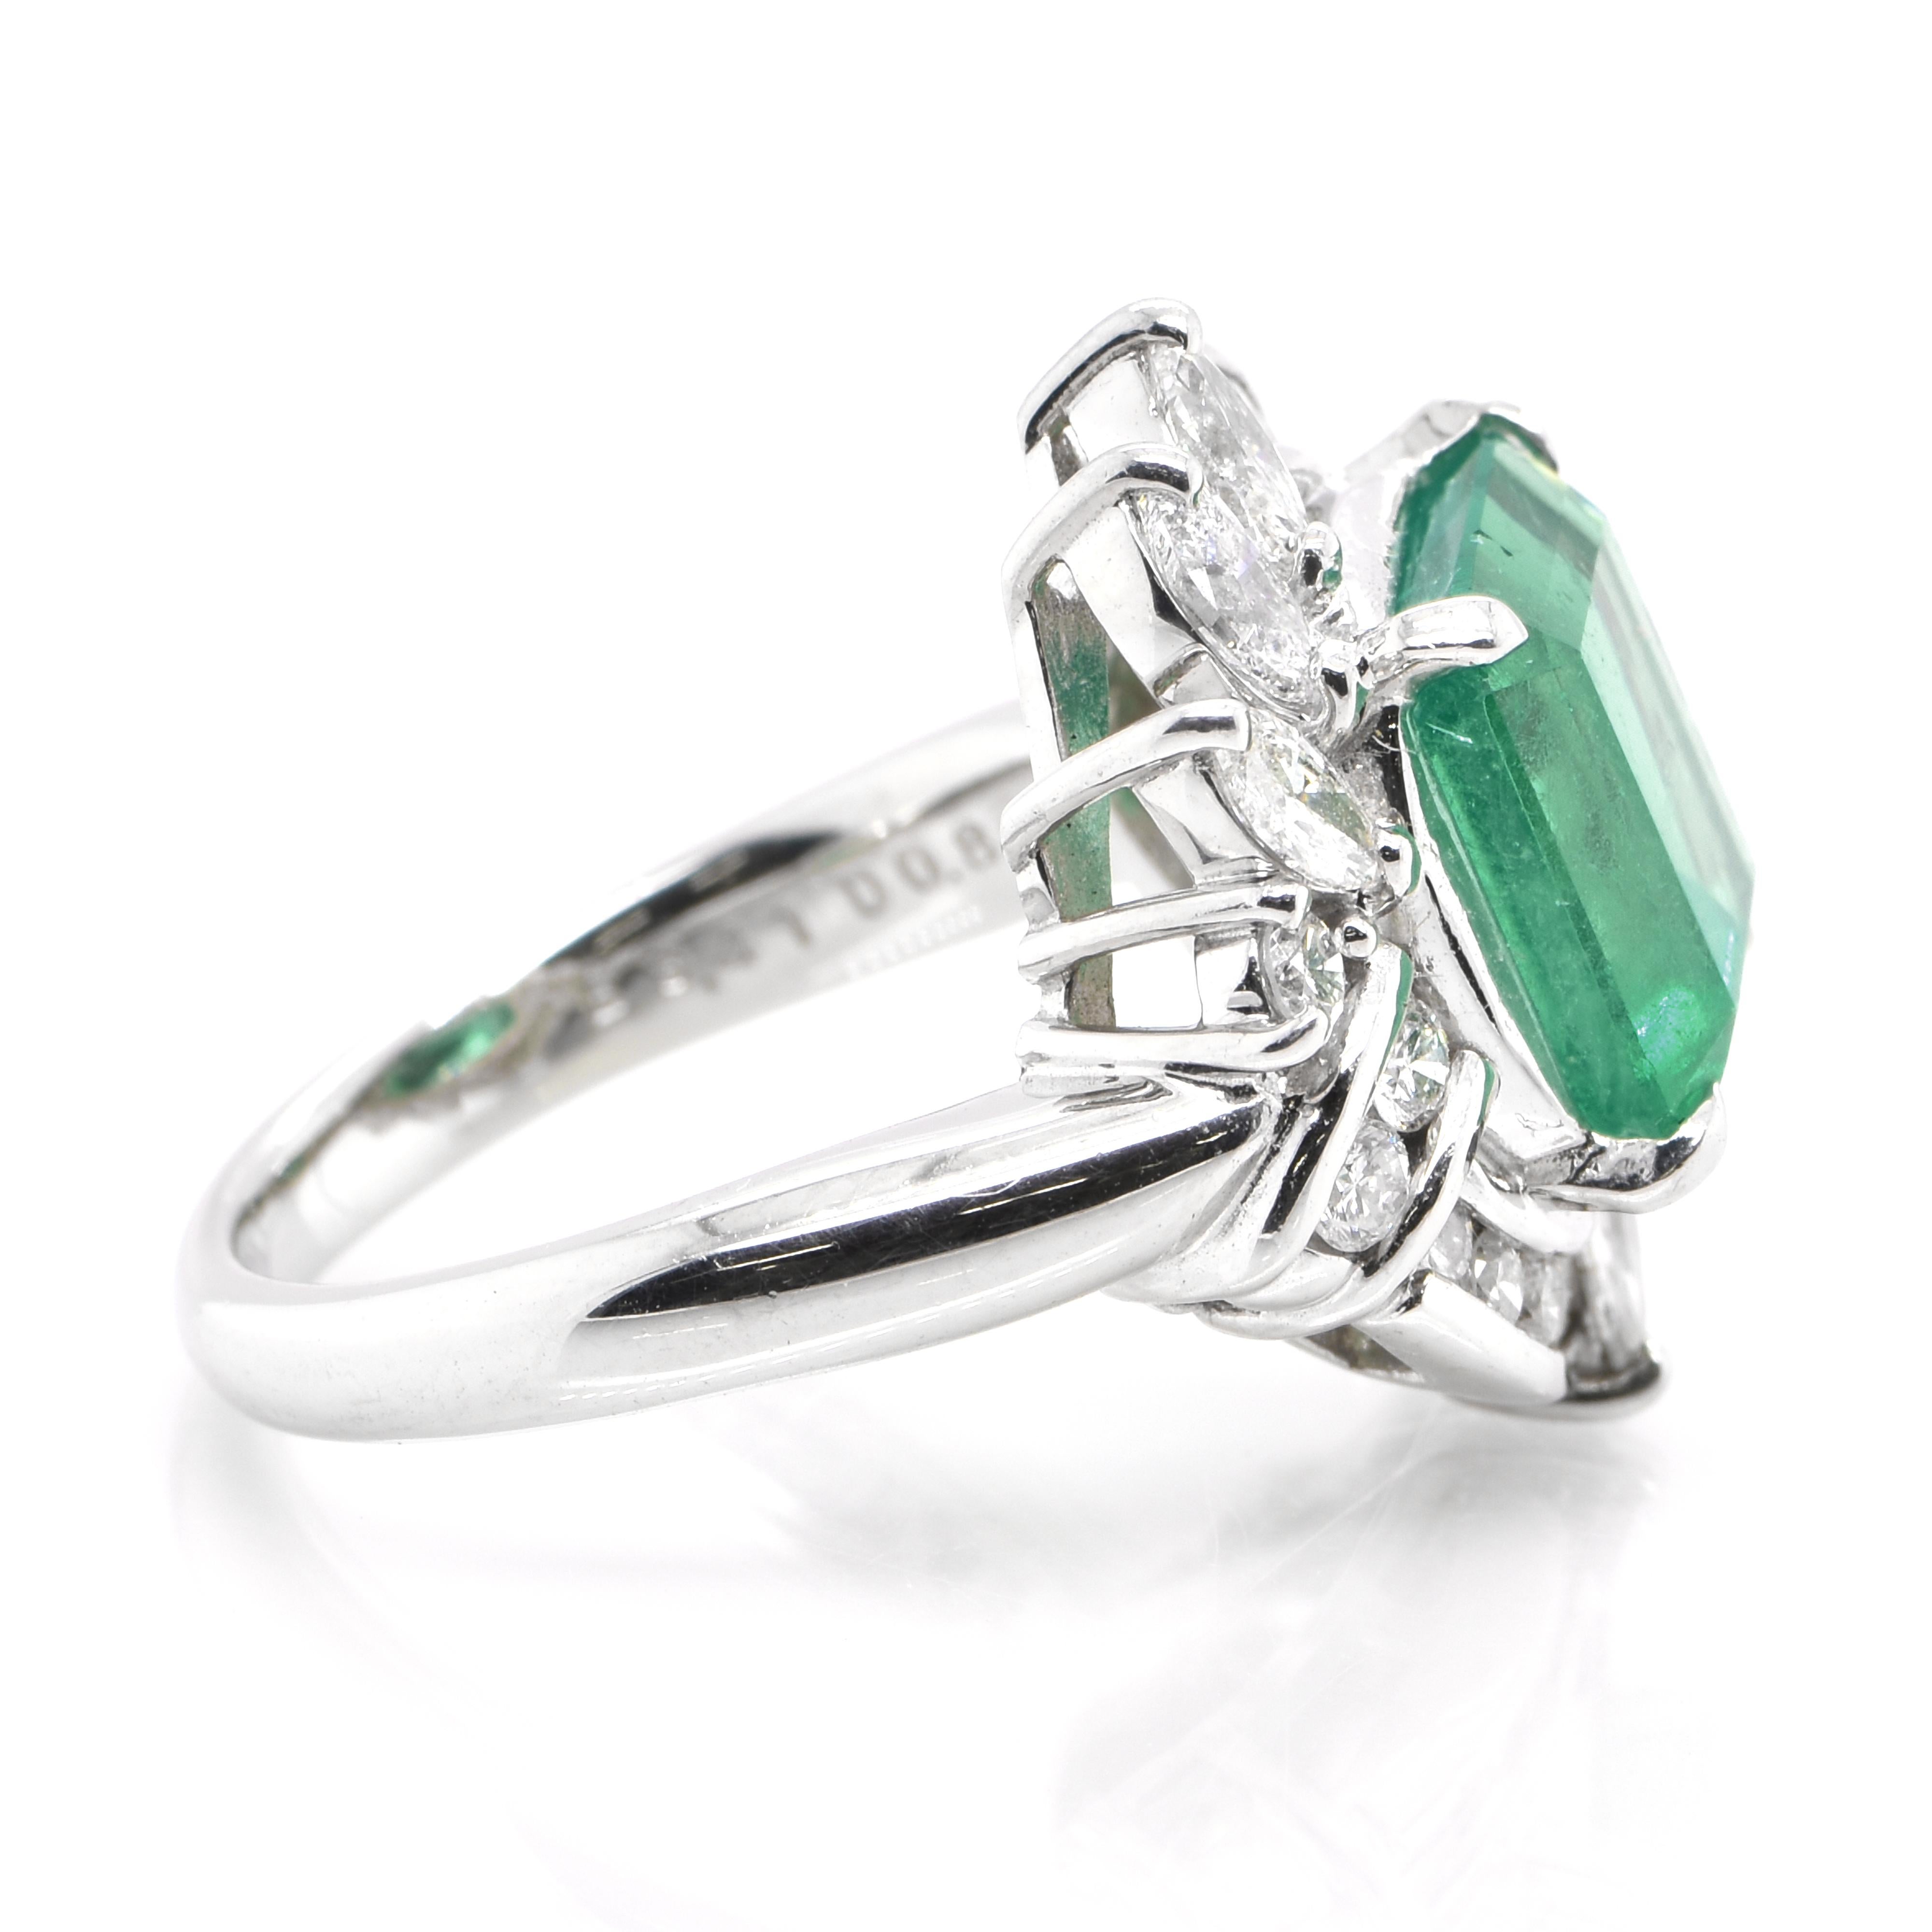 Emerald Cut 3.41 Carat Natural Emerald and Diamond Estate Ring Set in Platinum